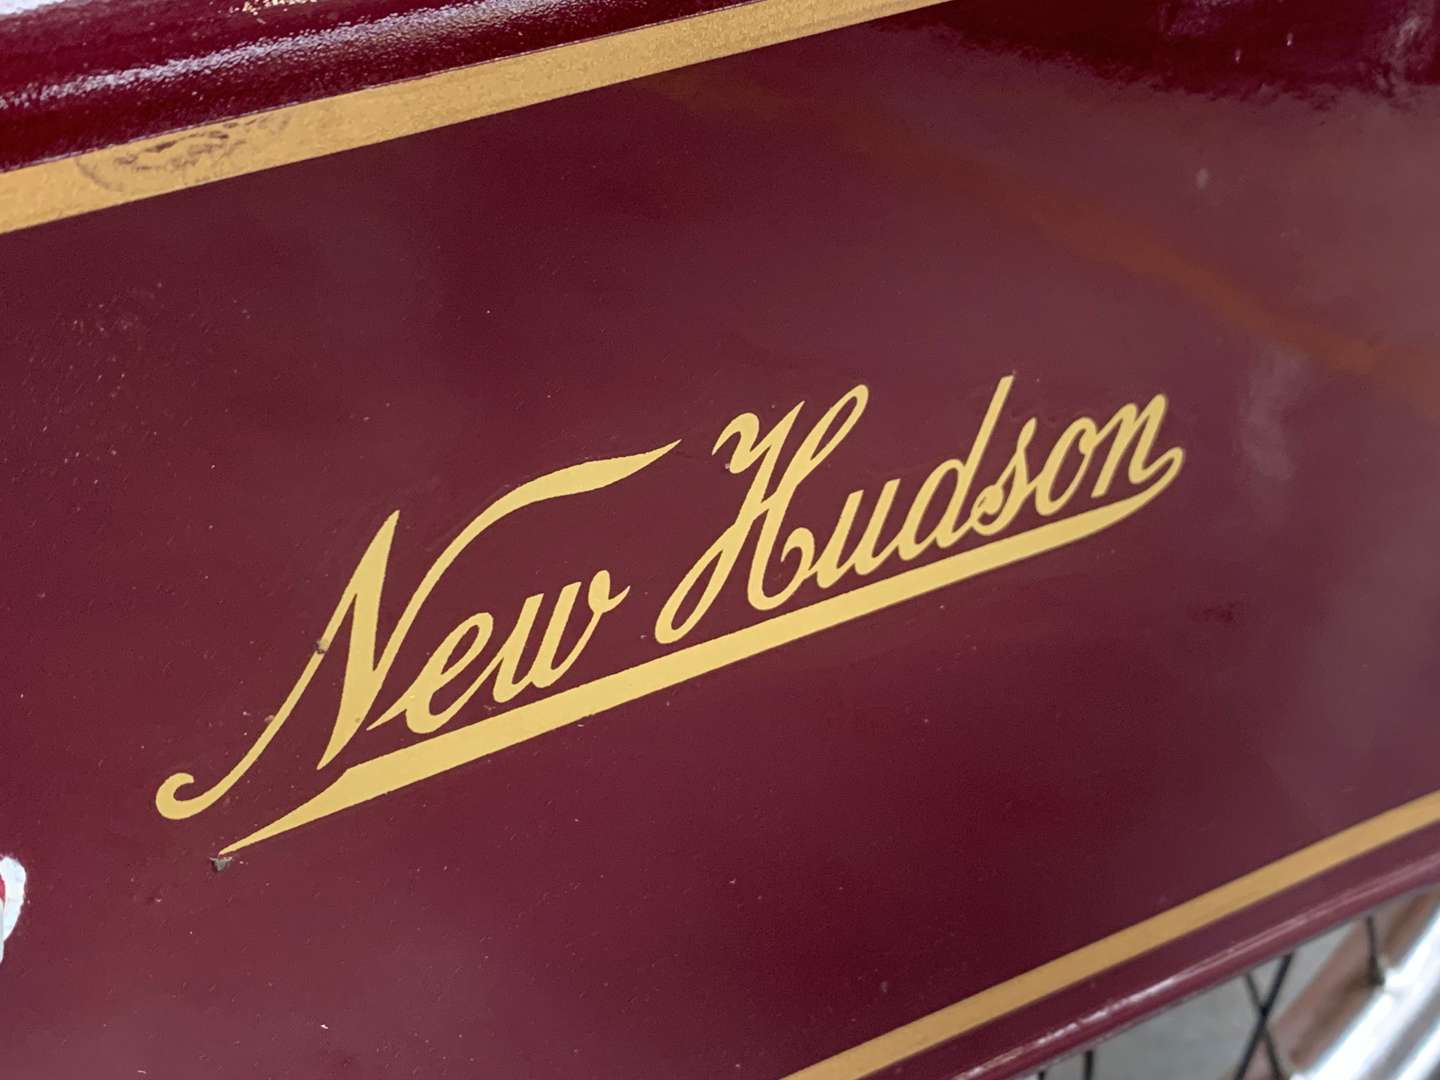 <p>1956 NEW HUDSON AUTOCYCLE&nbsp;</p>